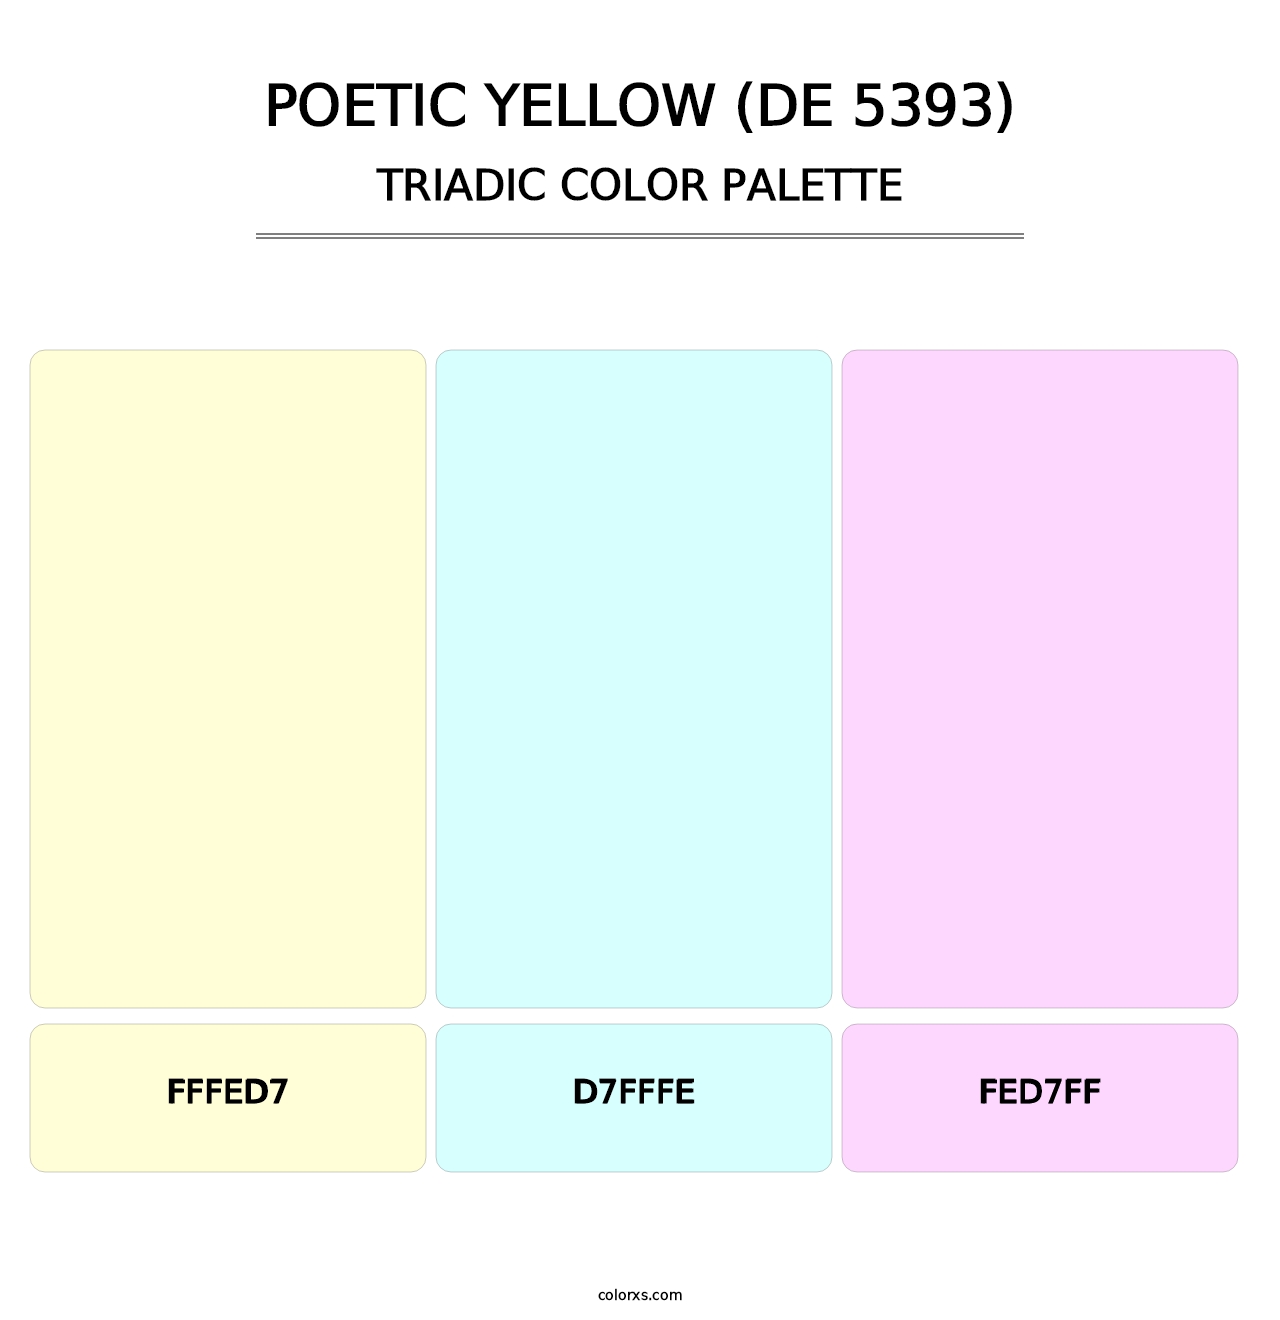 Poetic Yellow (DE 5393) - Triadic Color Palette